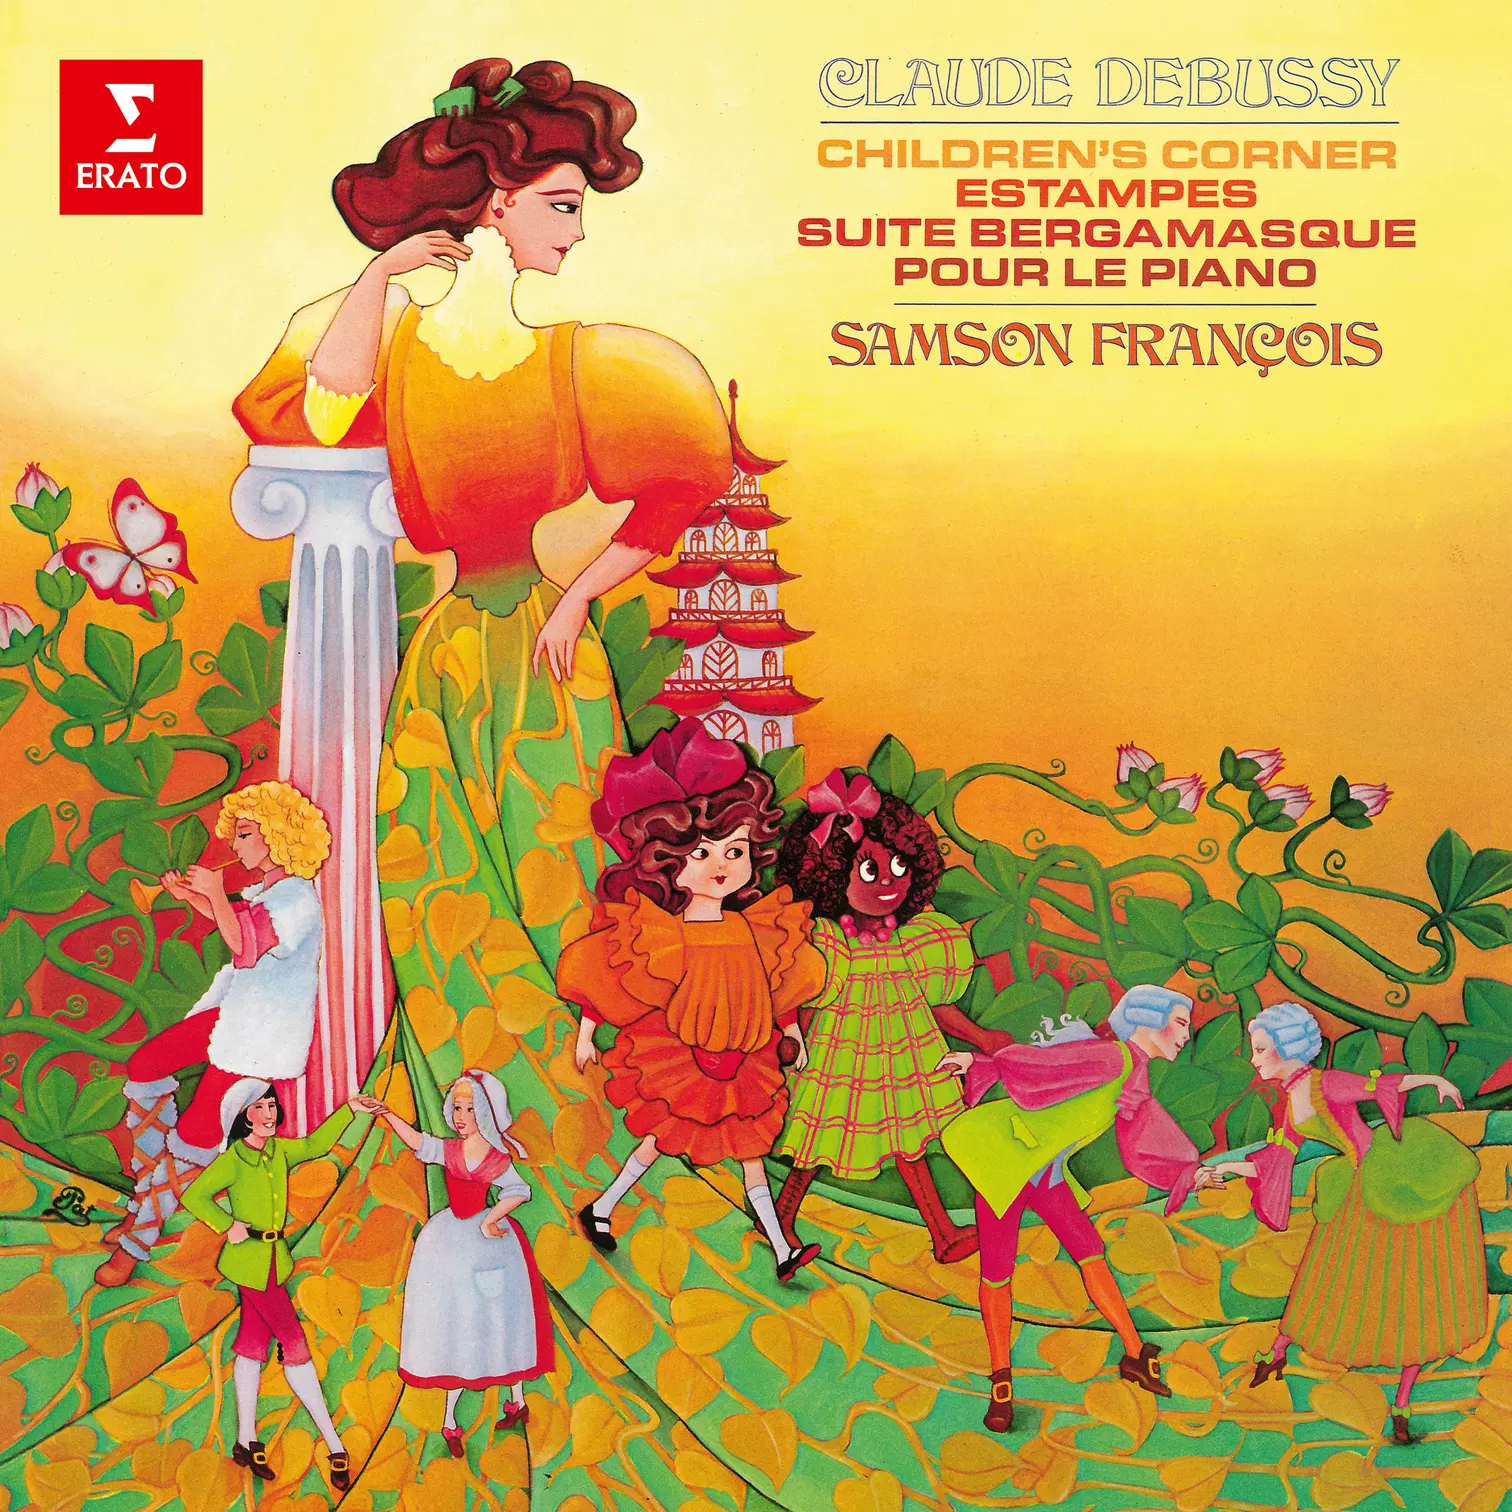 Debussy: Children’s Corner, Estampes & Suite bergamasque